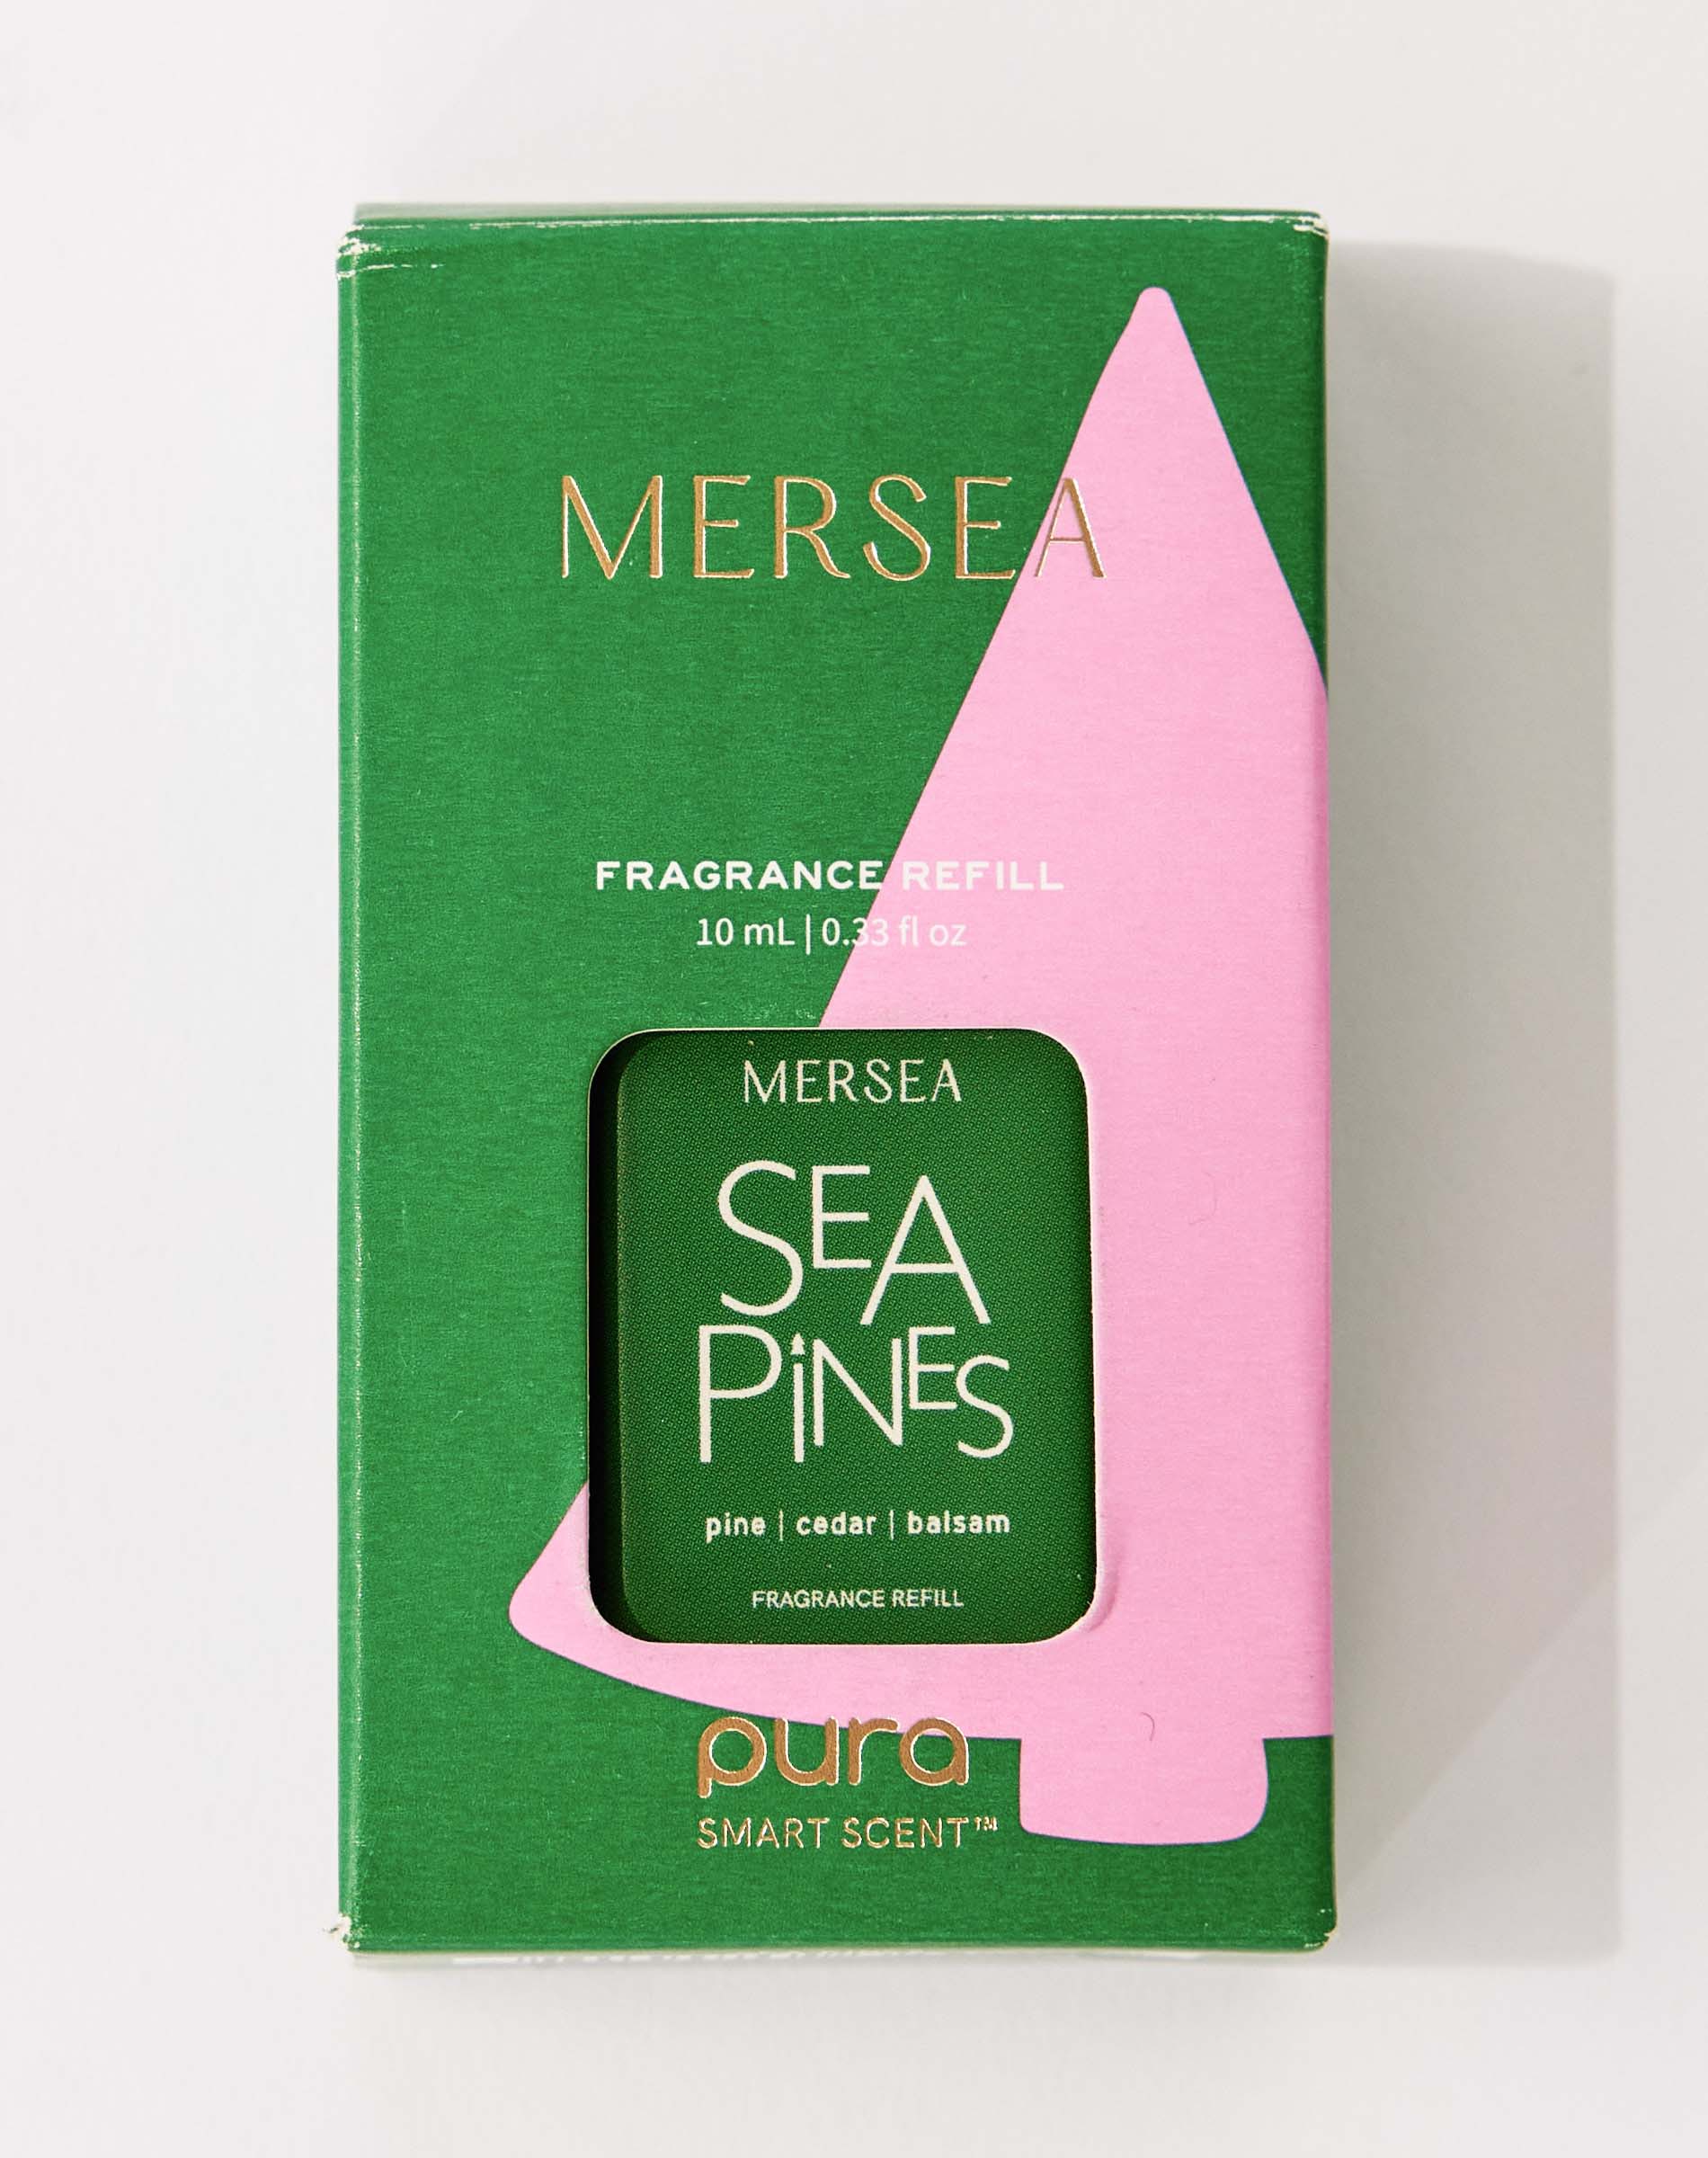 boxed mersea sea pines pura smart vial of mersea sea pines scent